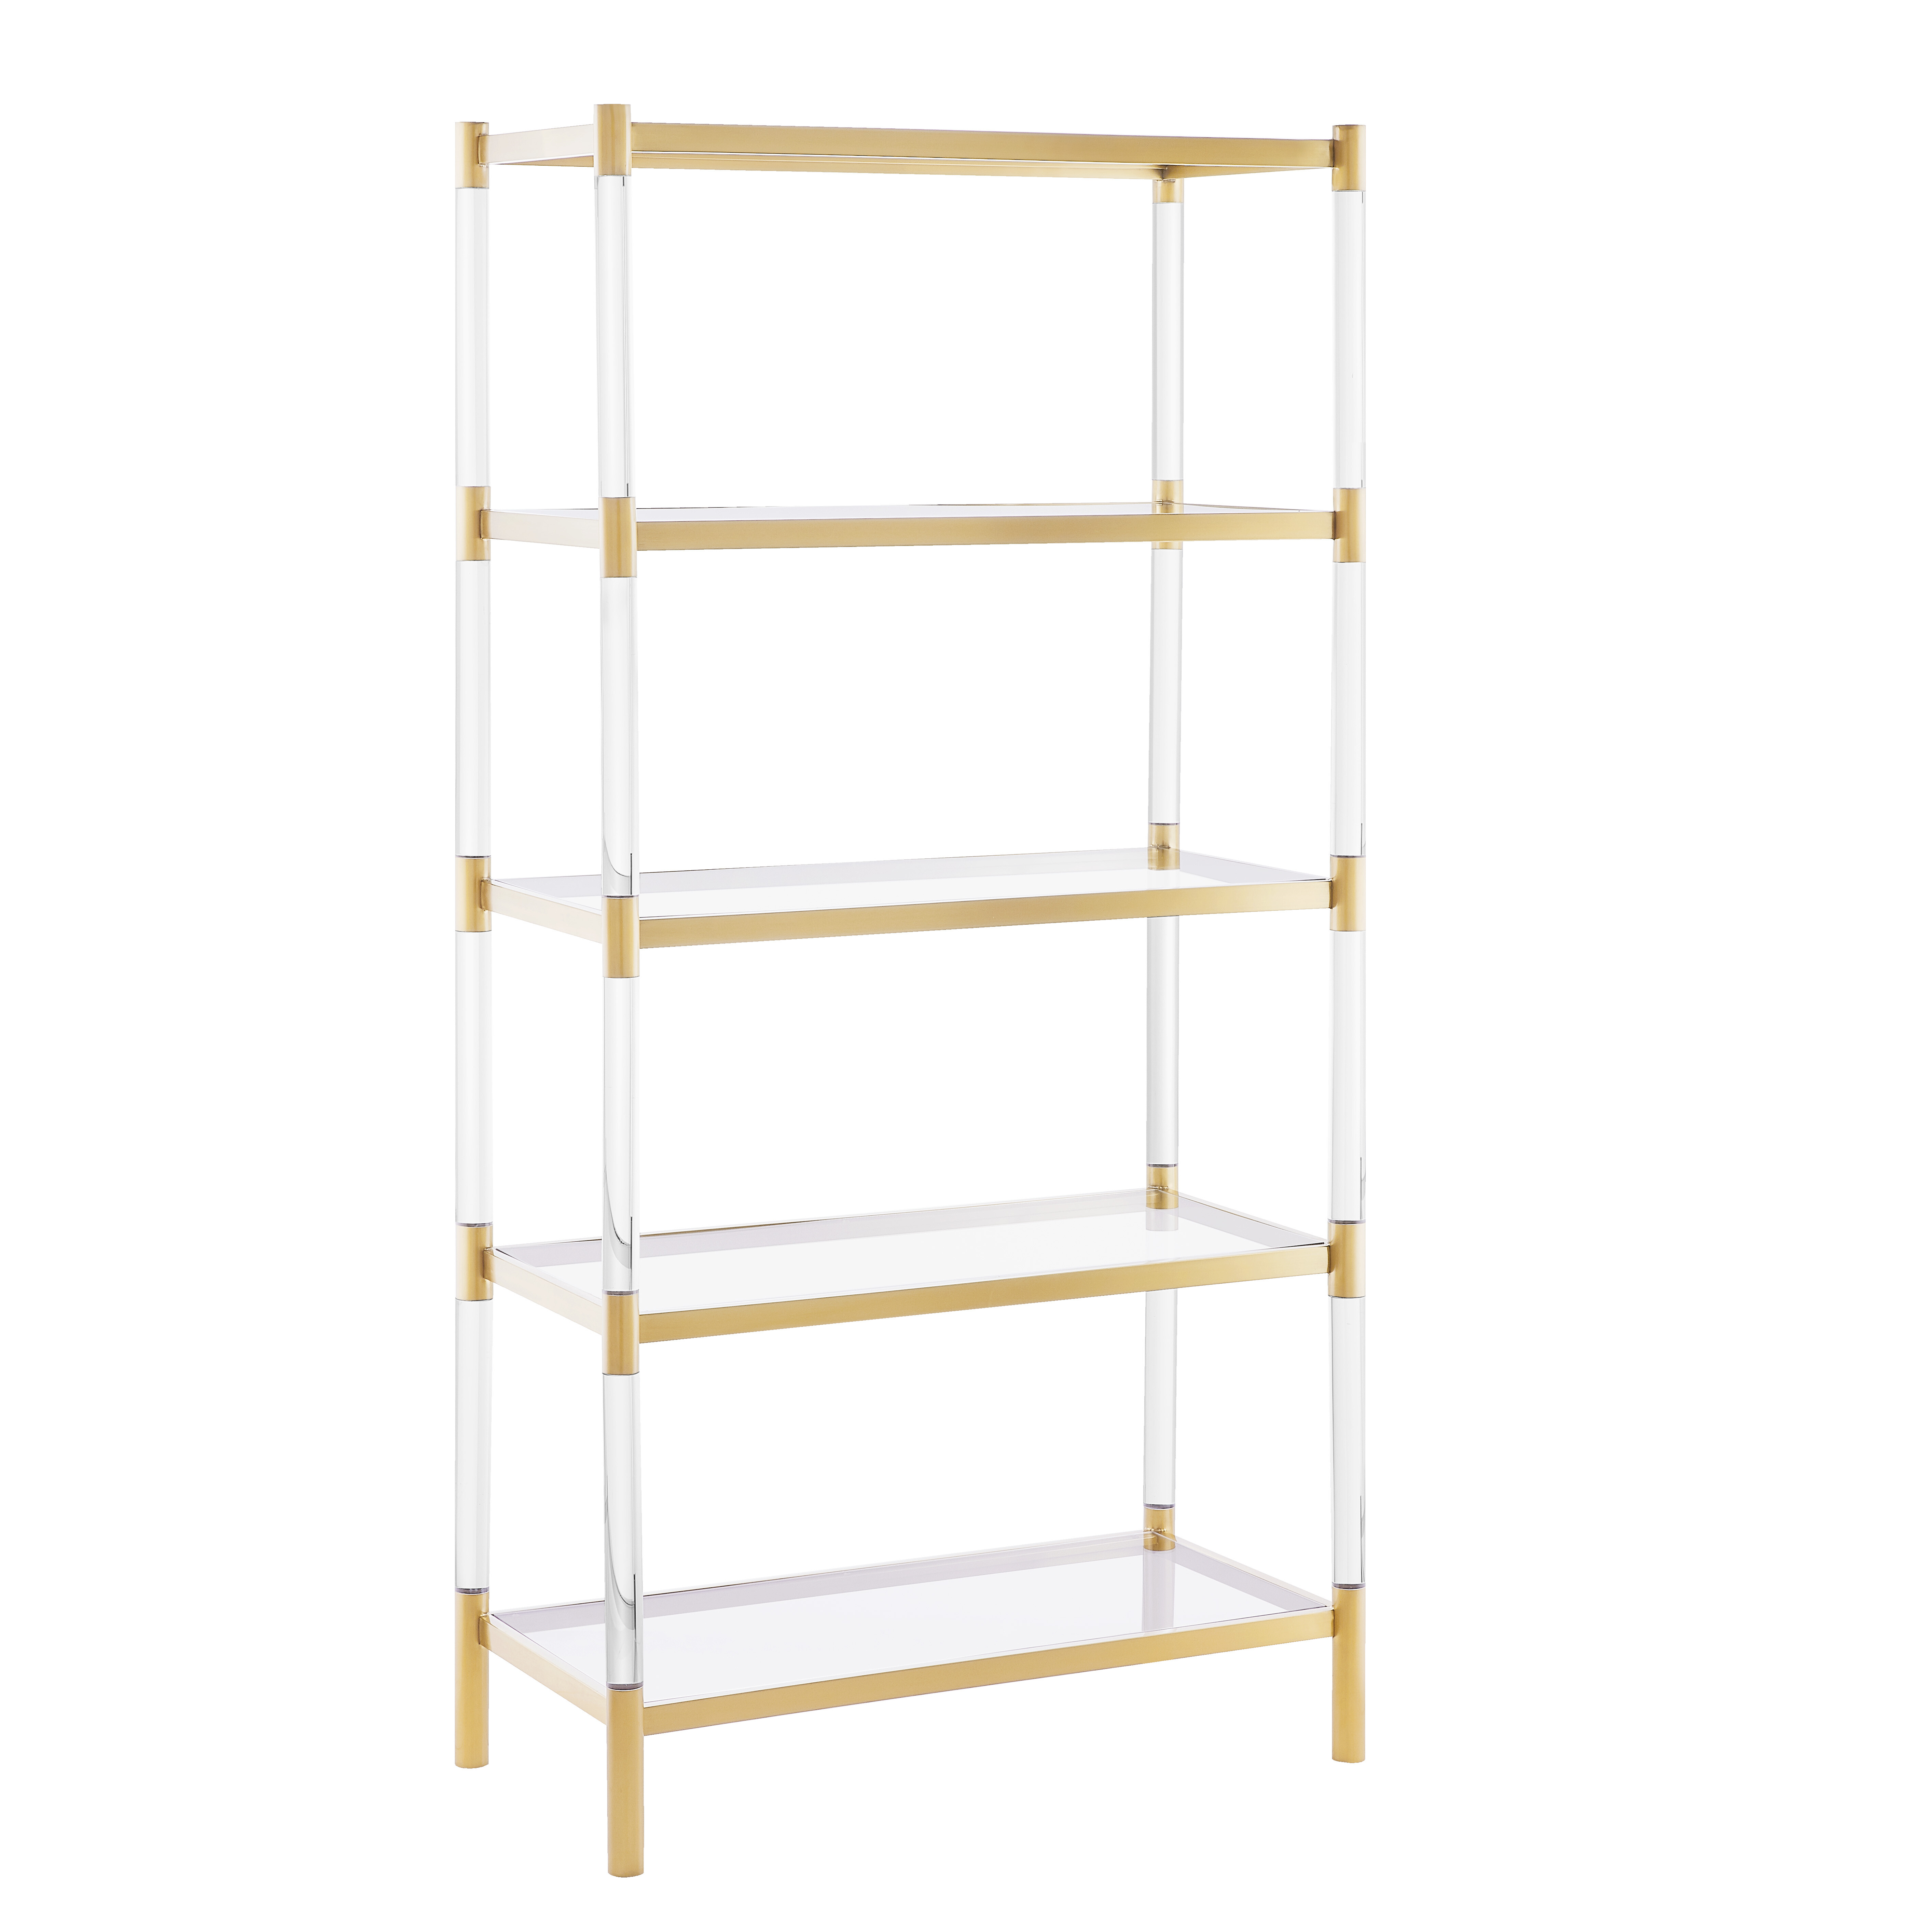 Customized simple bookcase acrylic storage rack bookshelf for living room